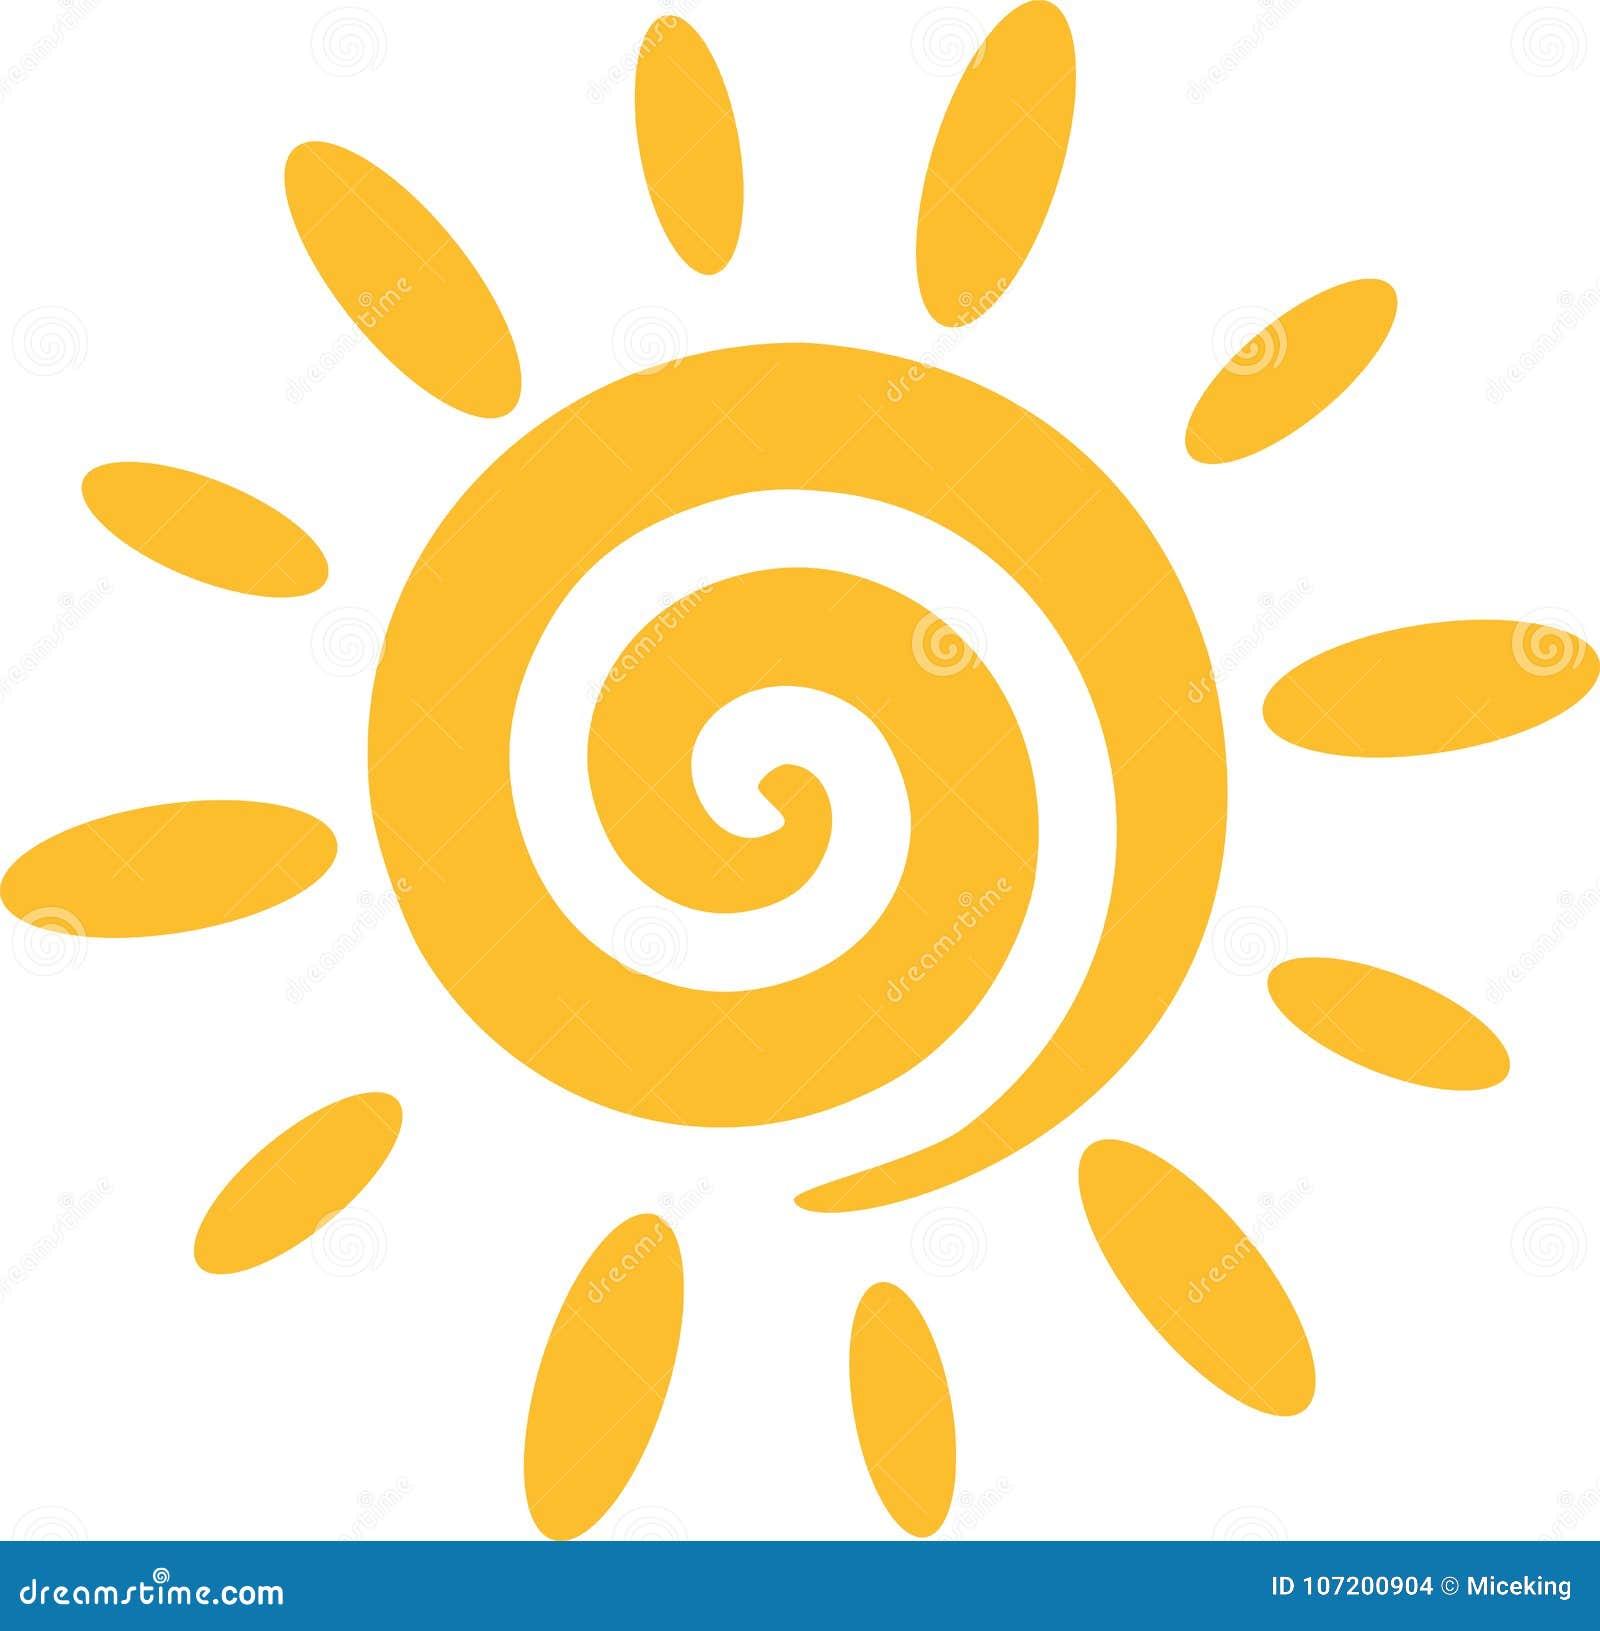 sun with spiral